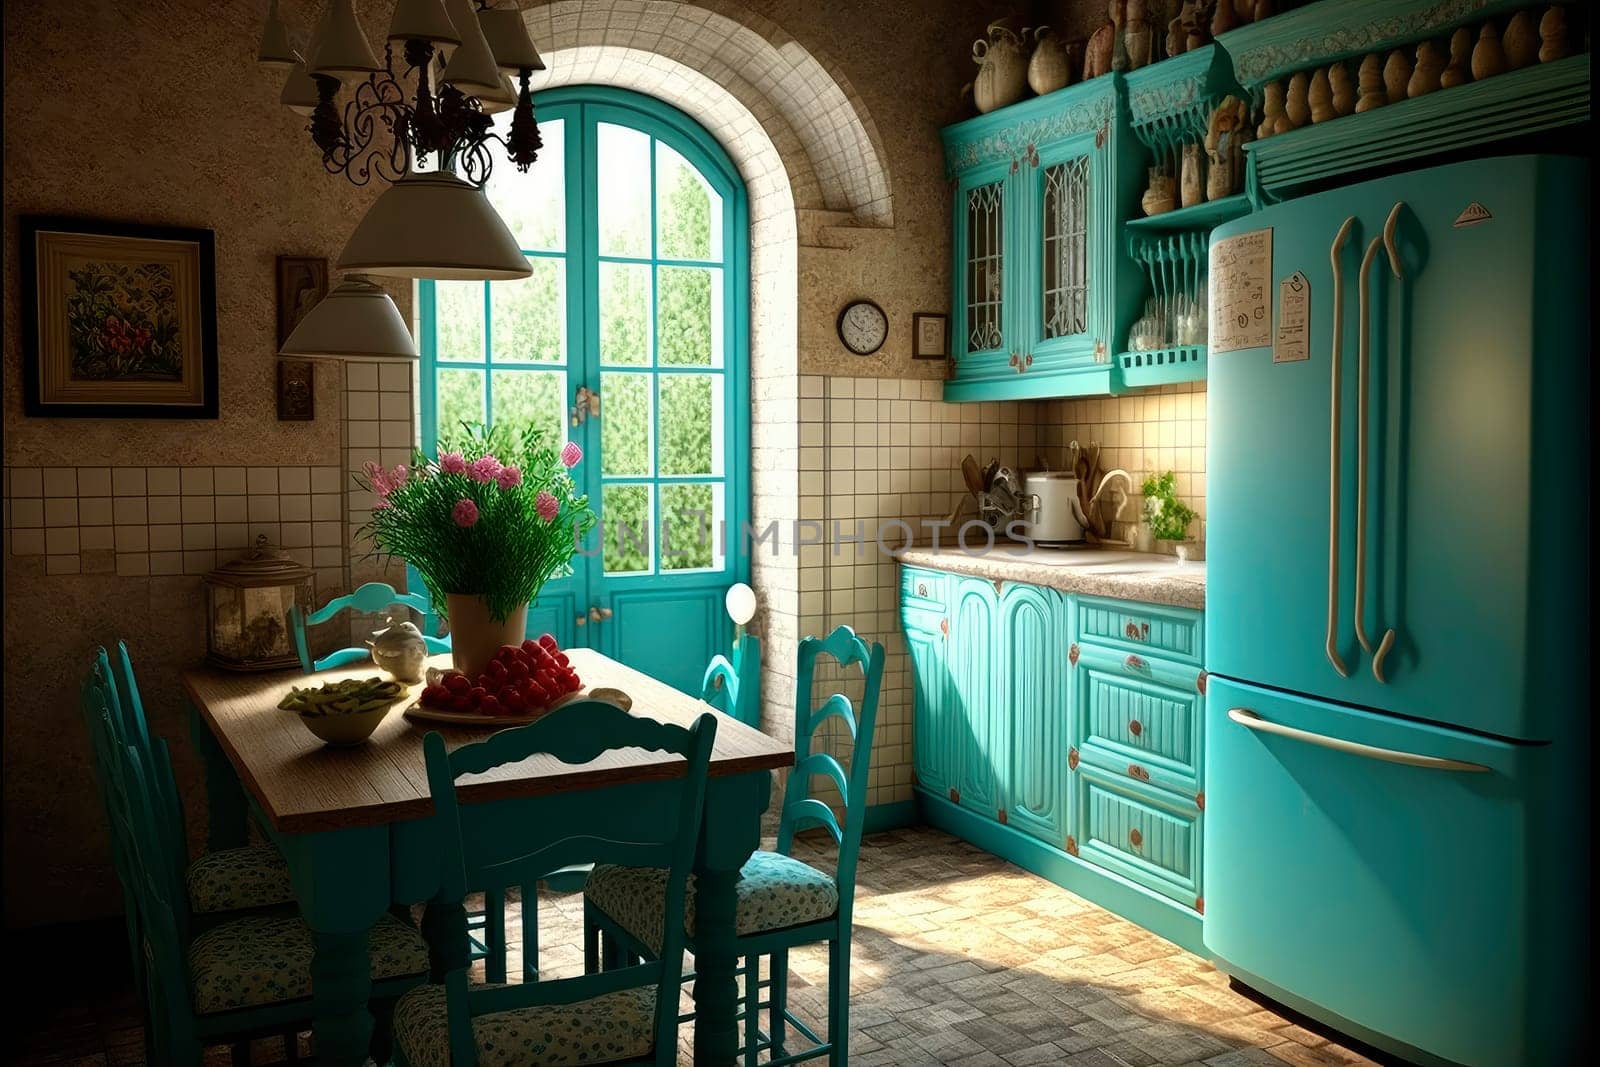 Provence style kitchen interior. by yanadjana